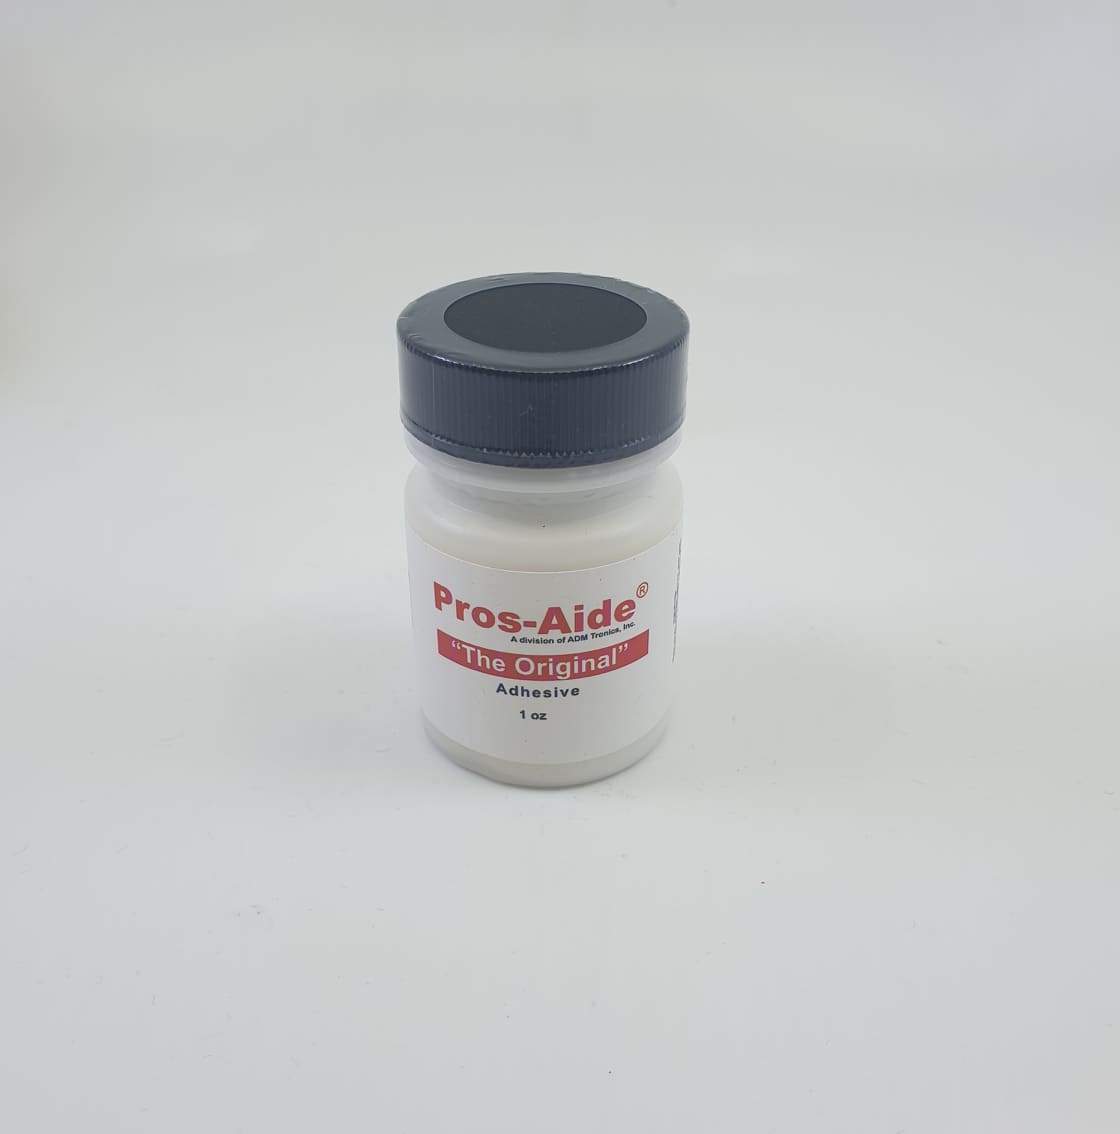 Pros-Aide I Adhesive (1 oz)